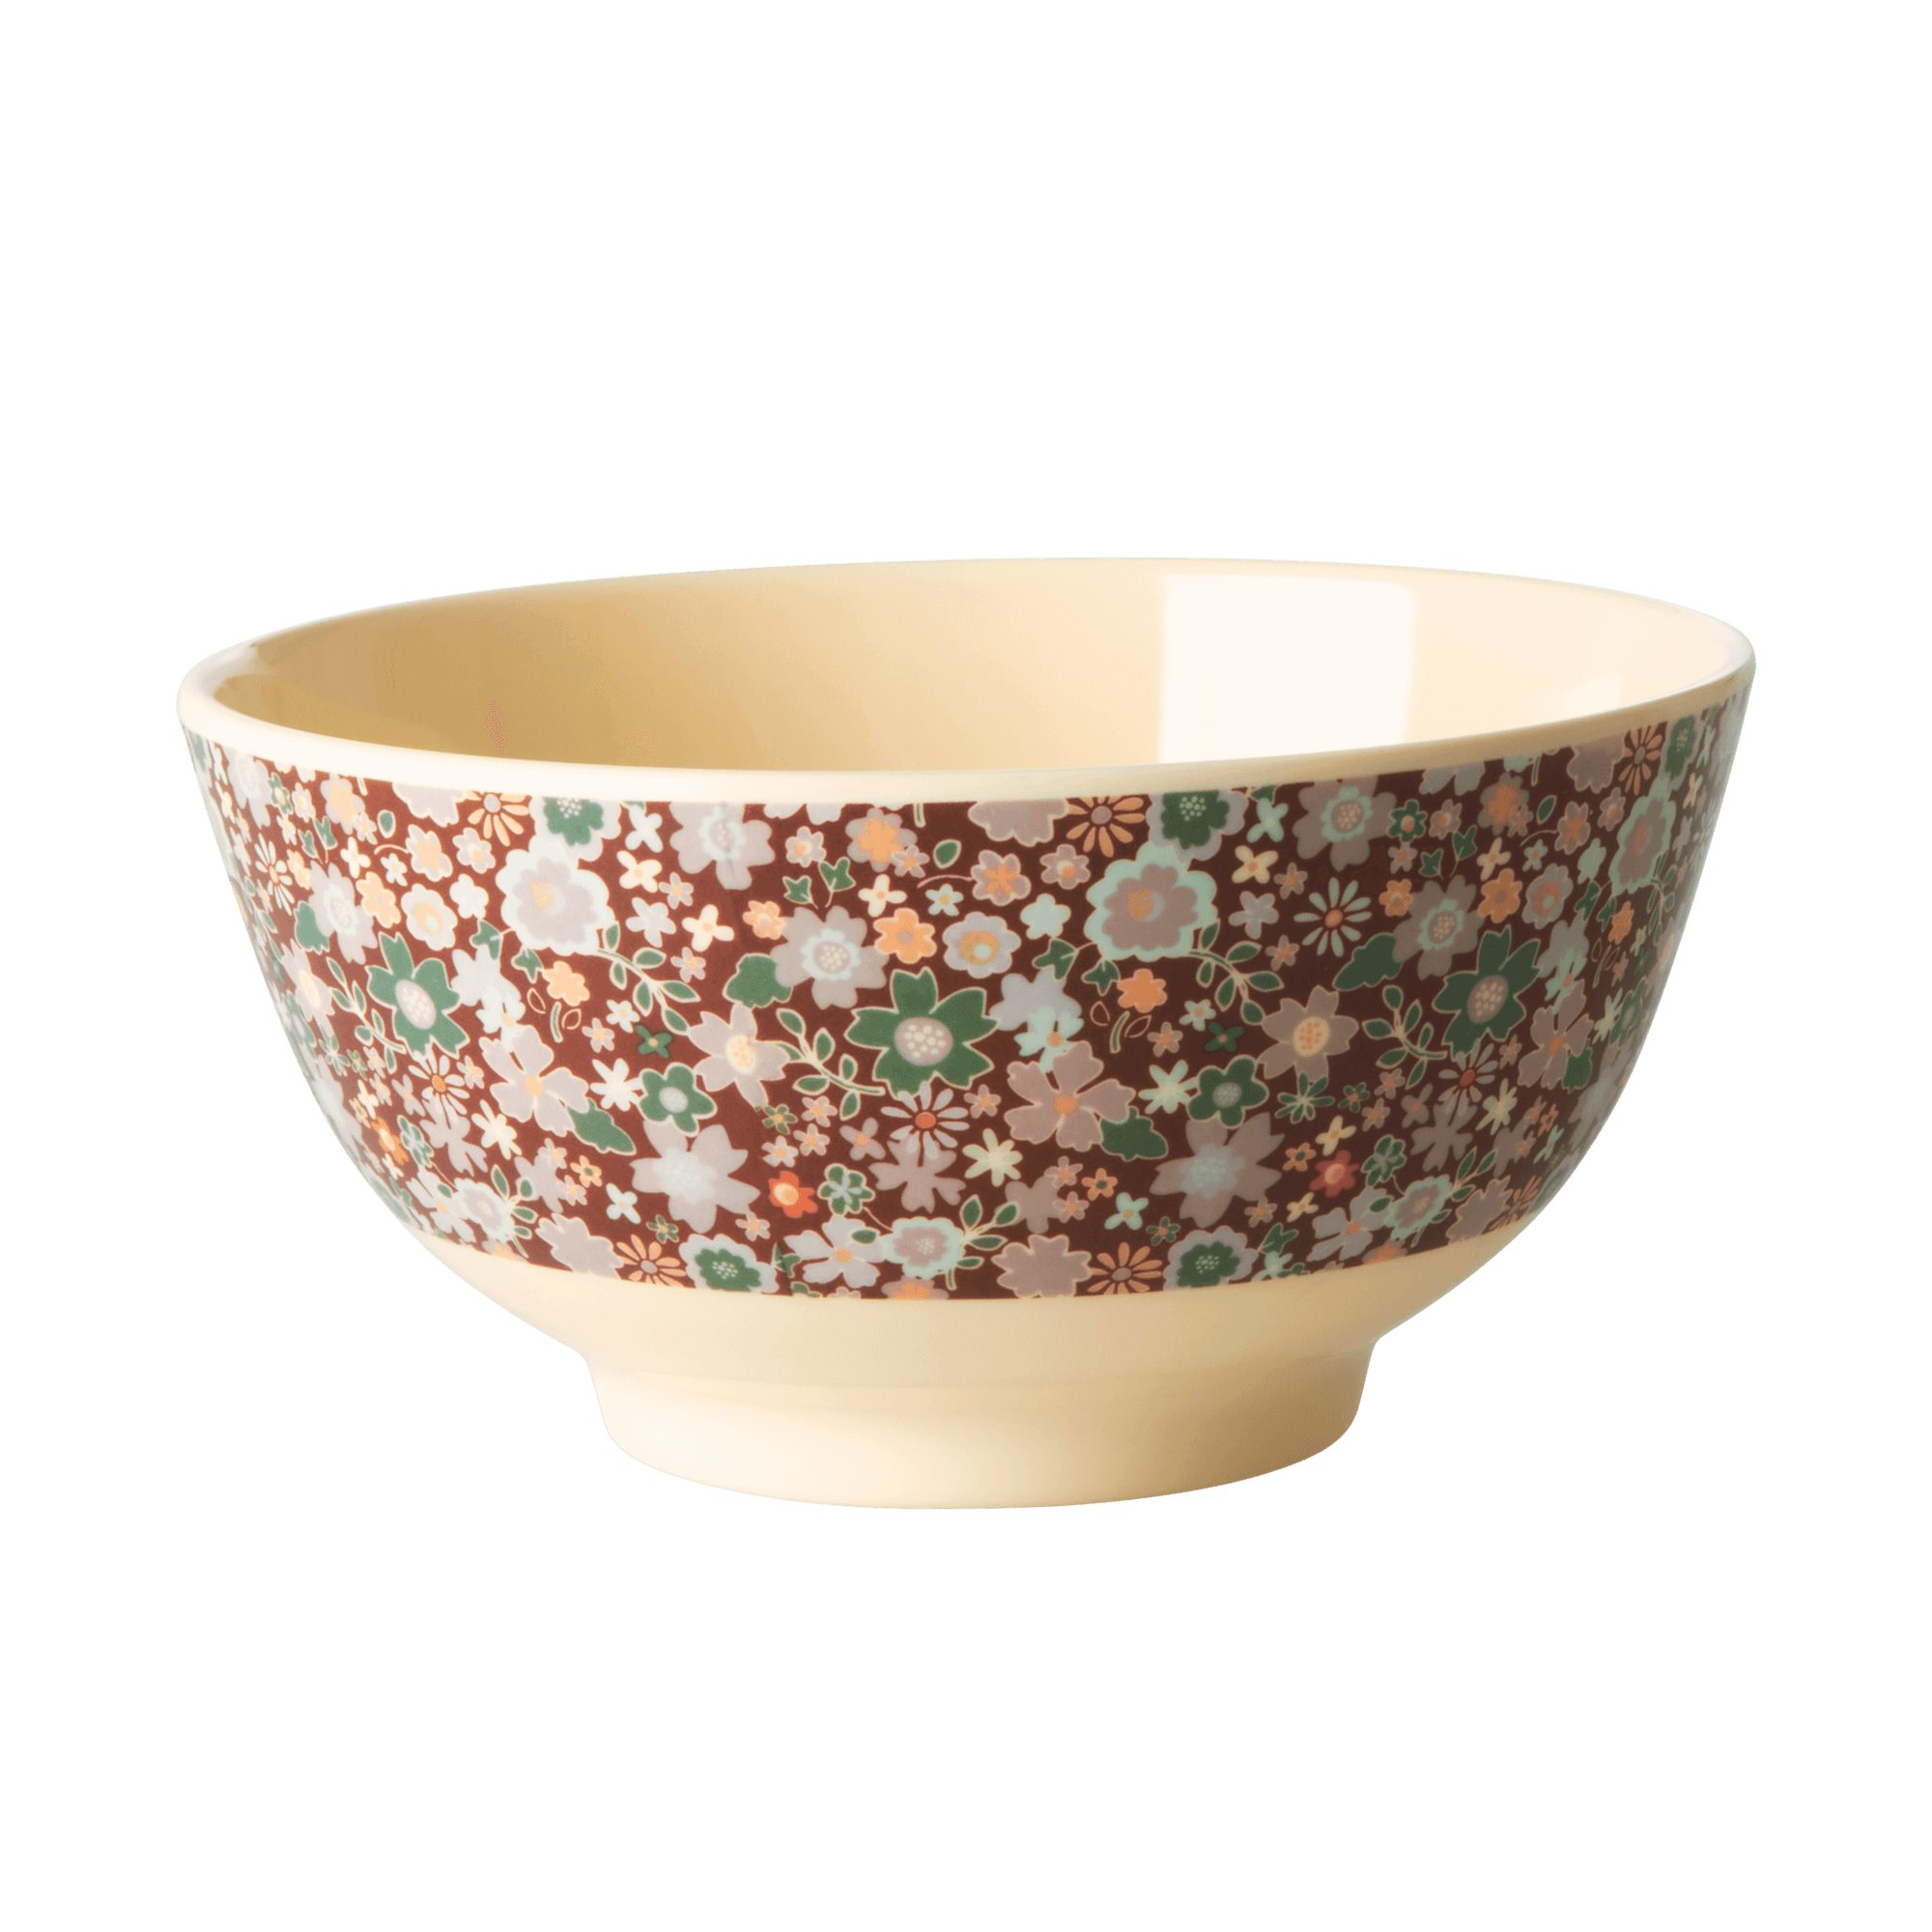 Medium Melamine Bowl - Floral Print - rice